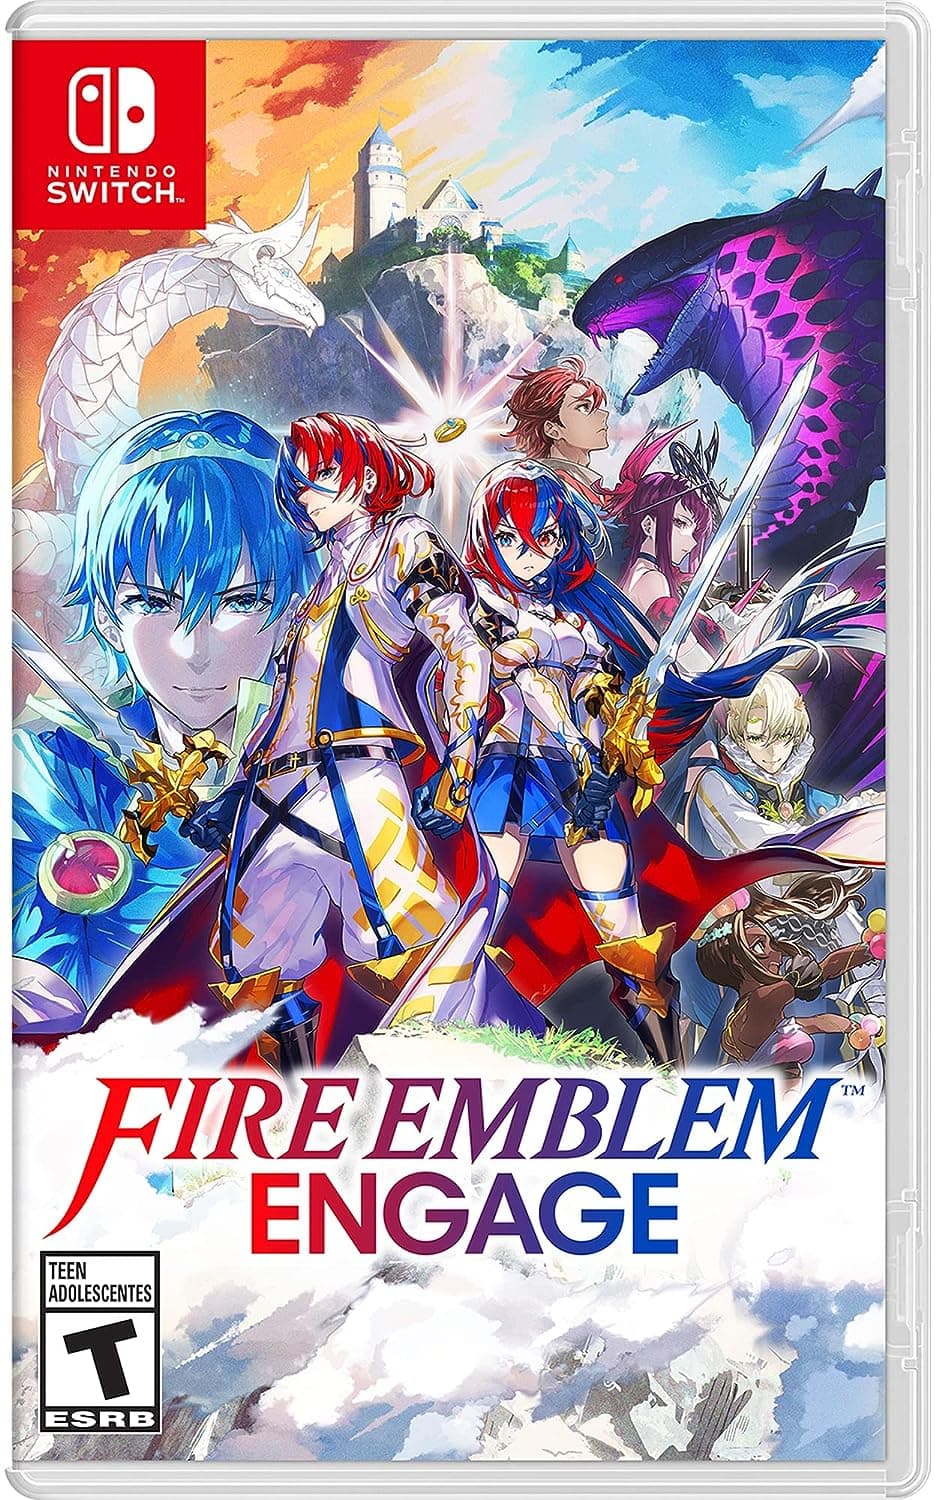 Fire Emblem Engage Nintendo Switch artwork.